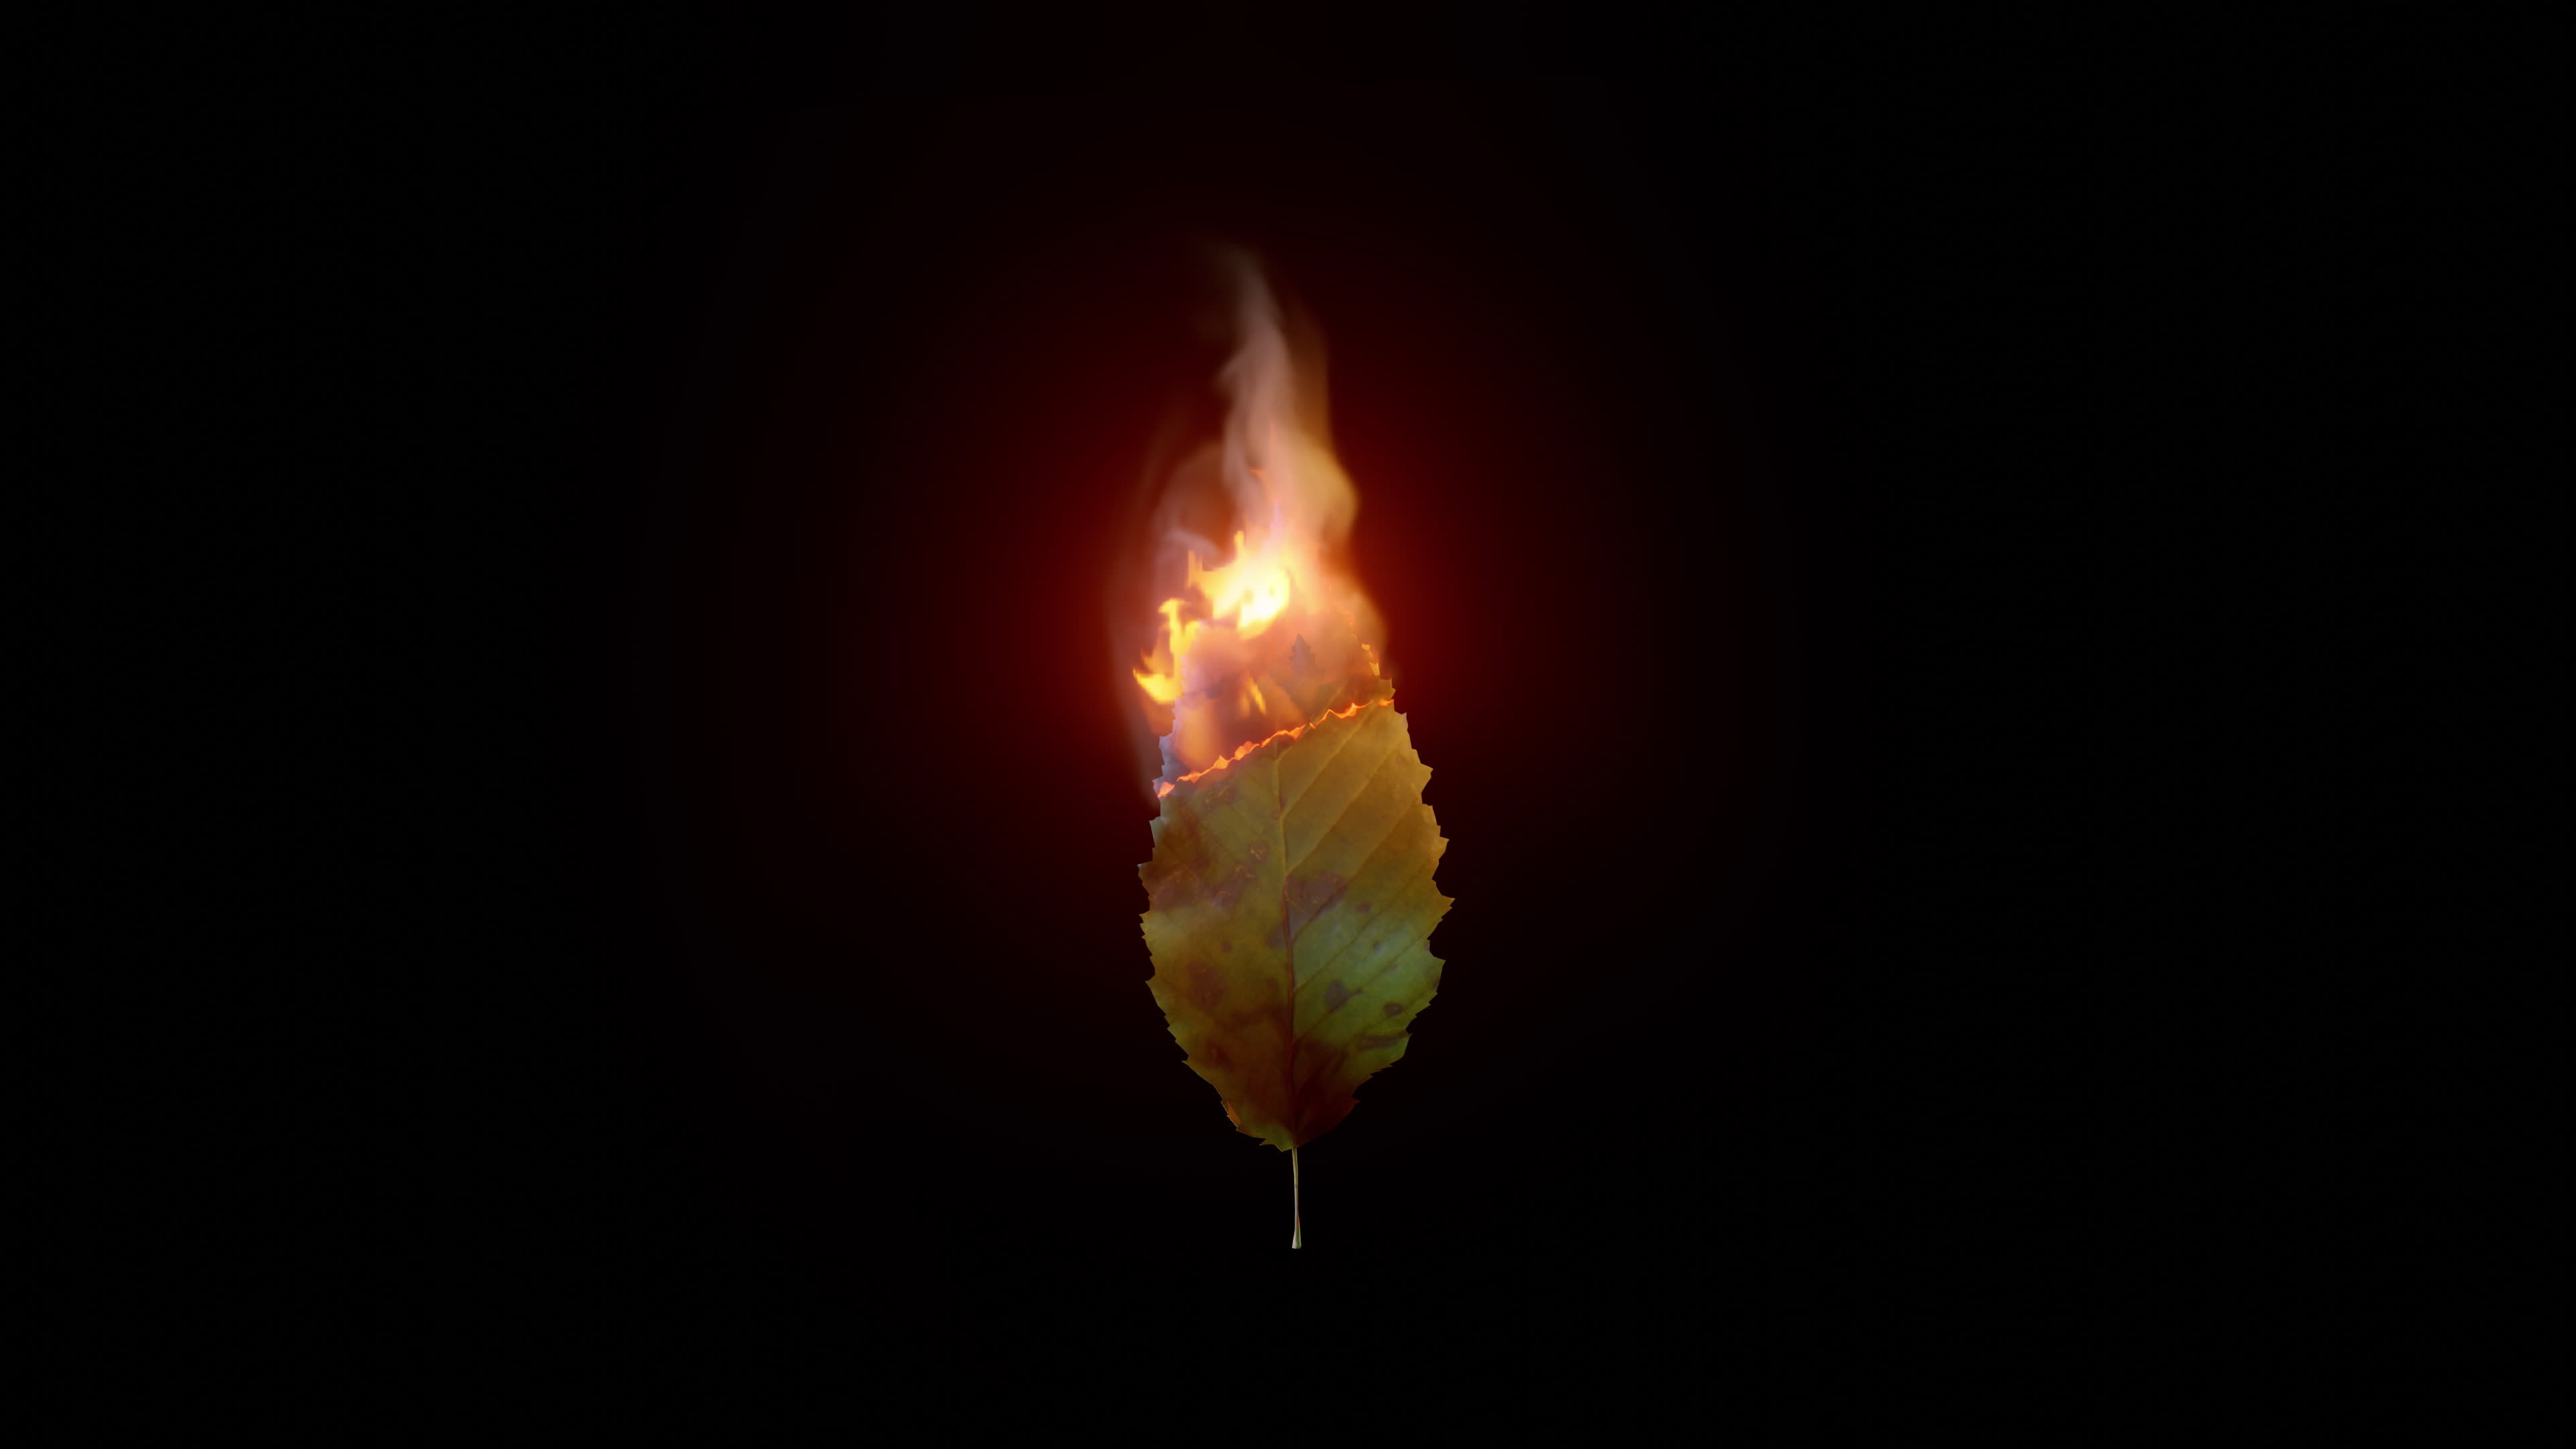 Leaf on fire